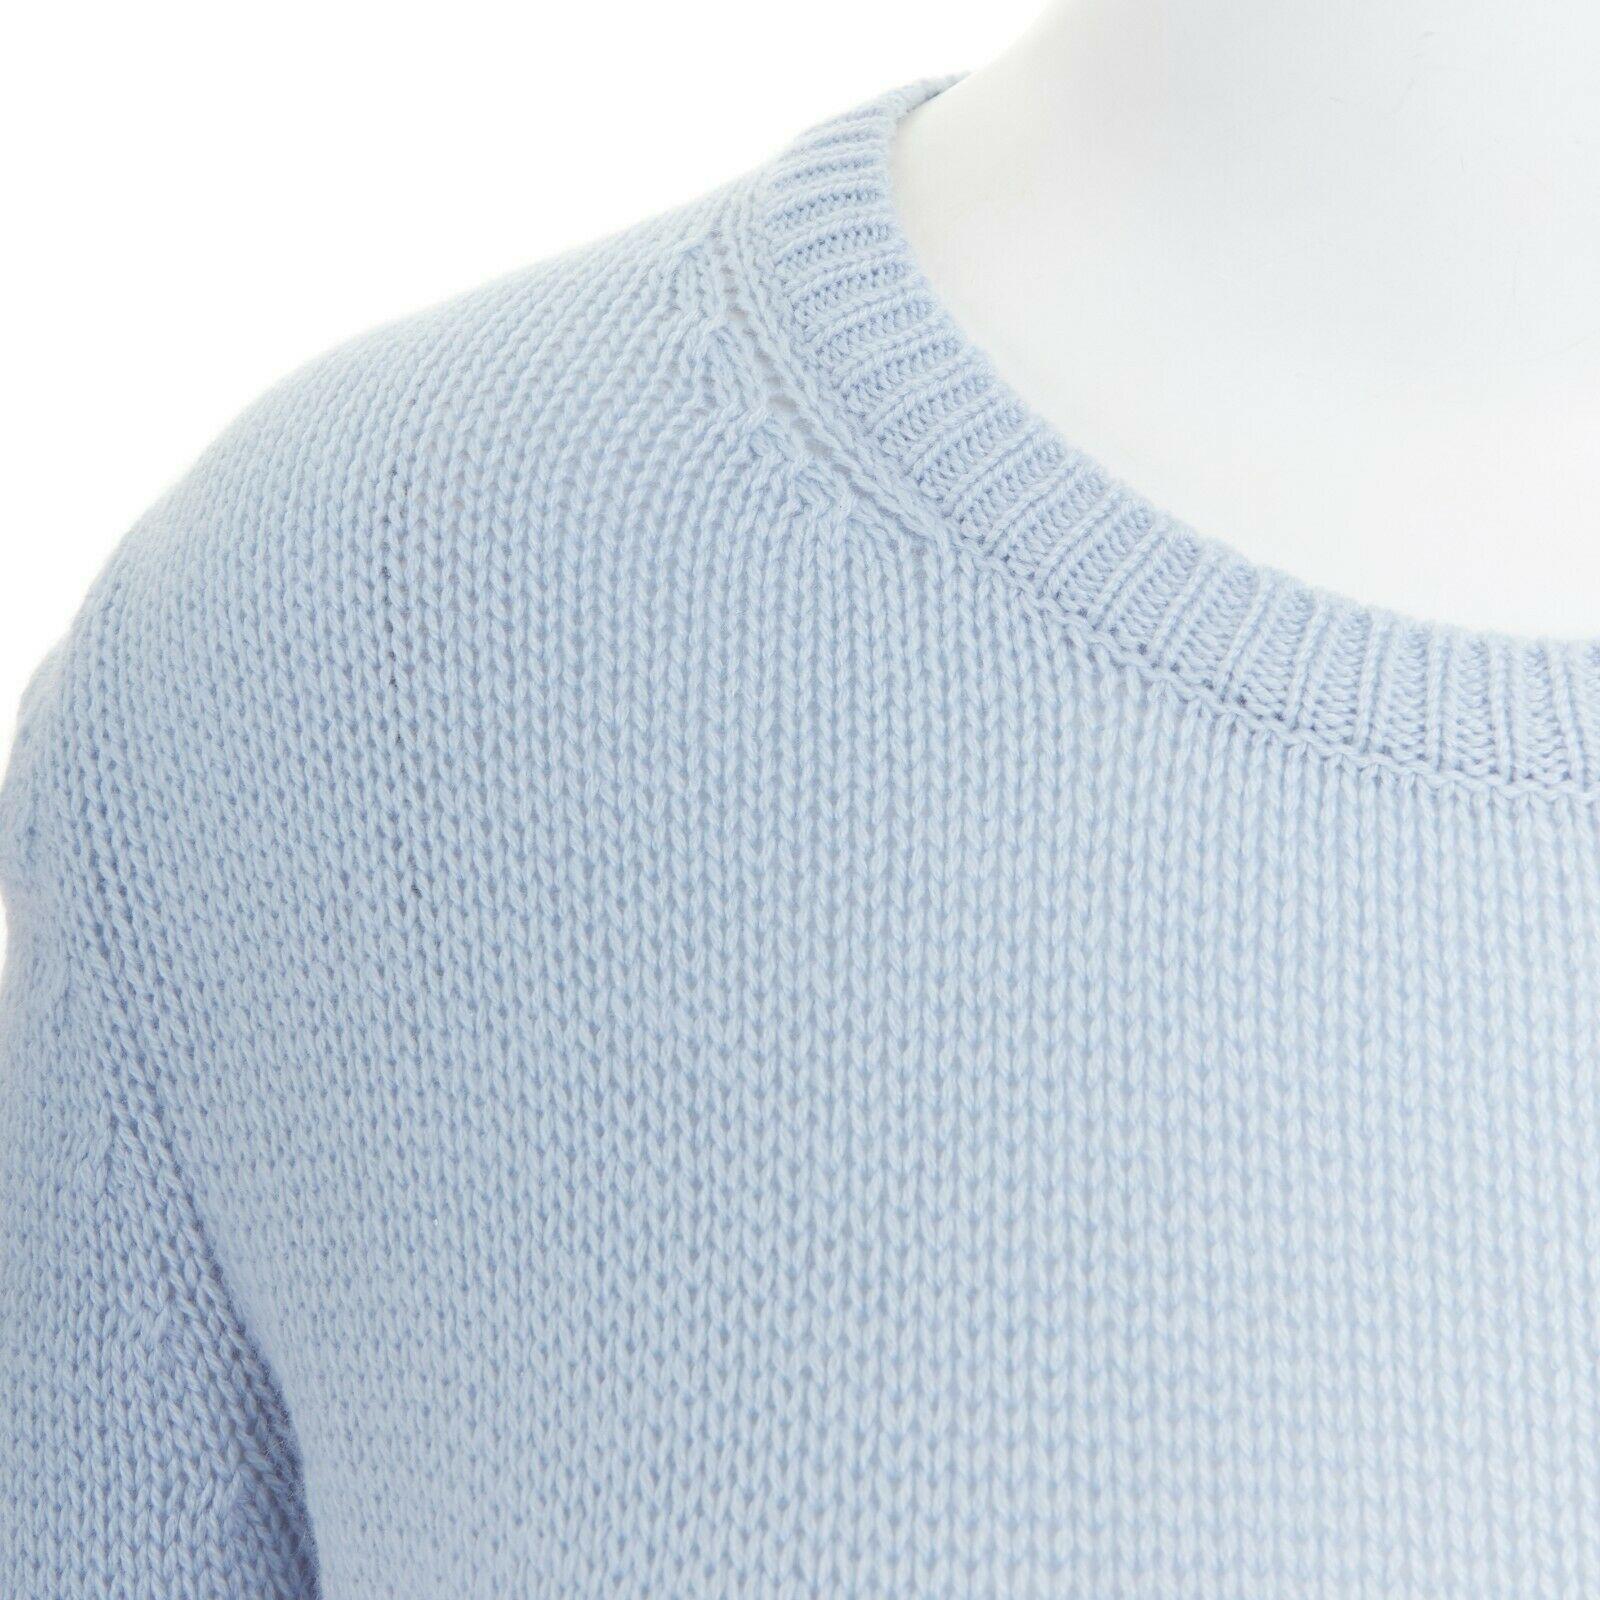 MIU MIU wool knit pastel blue crystal embellished flower brooch sweater top M 2